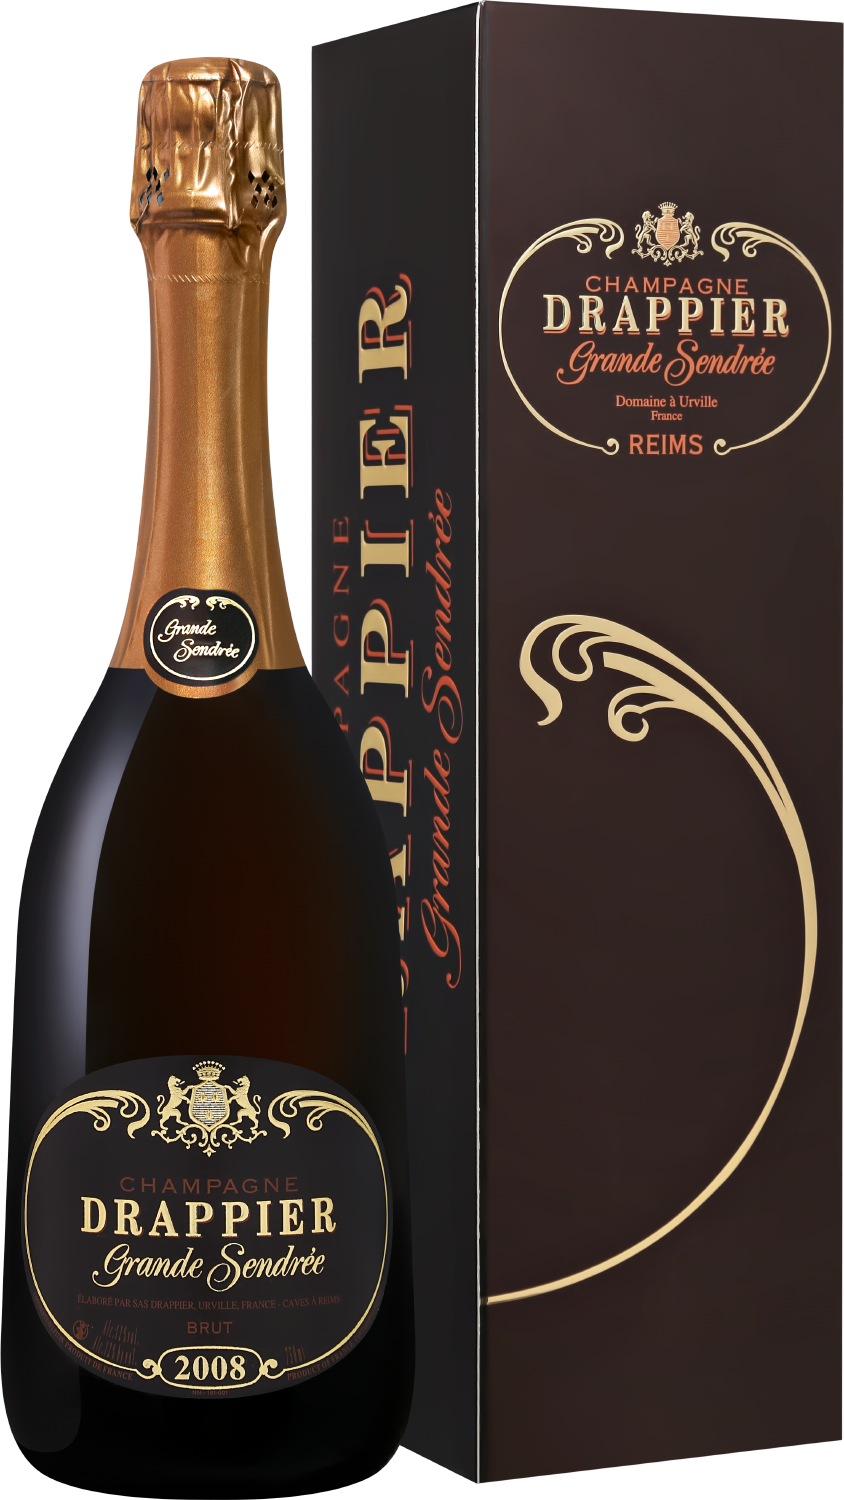 Drappier Grande Sendrée Brut Champagne AOP in gift box drappier andquot grande sendreeandquot gift box with 2 glasses